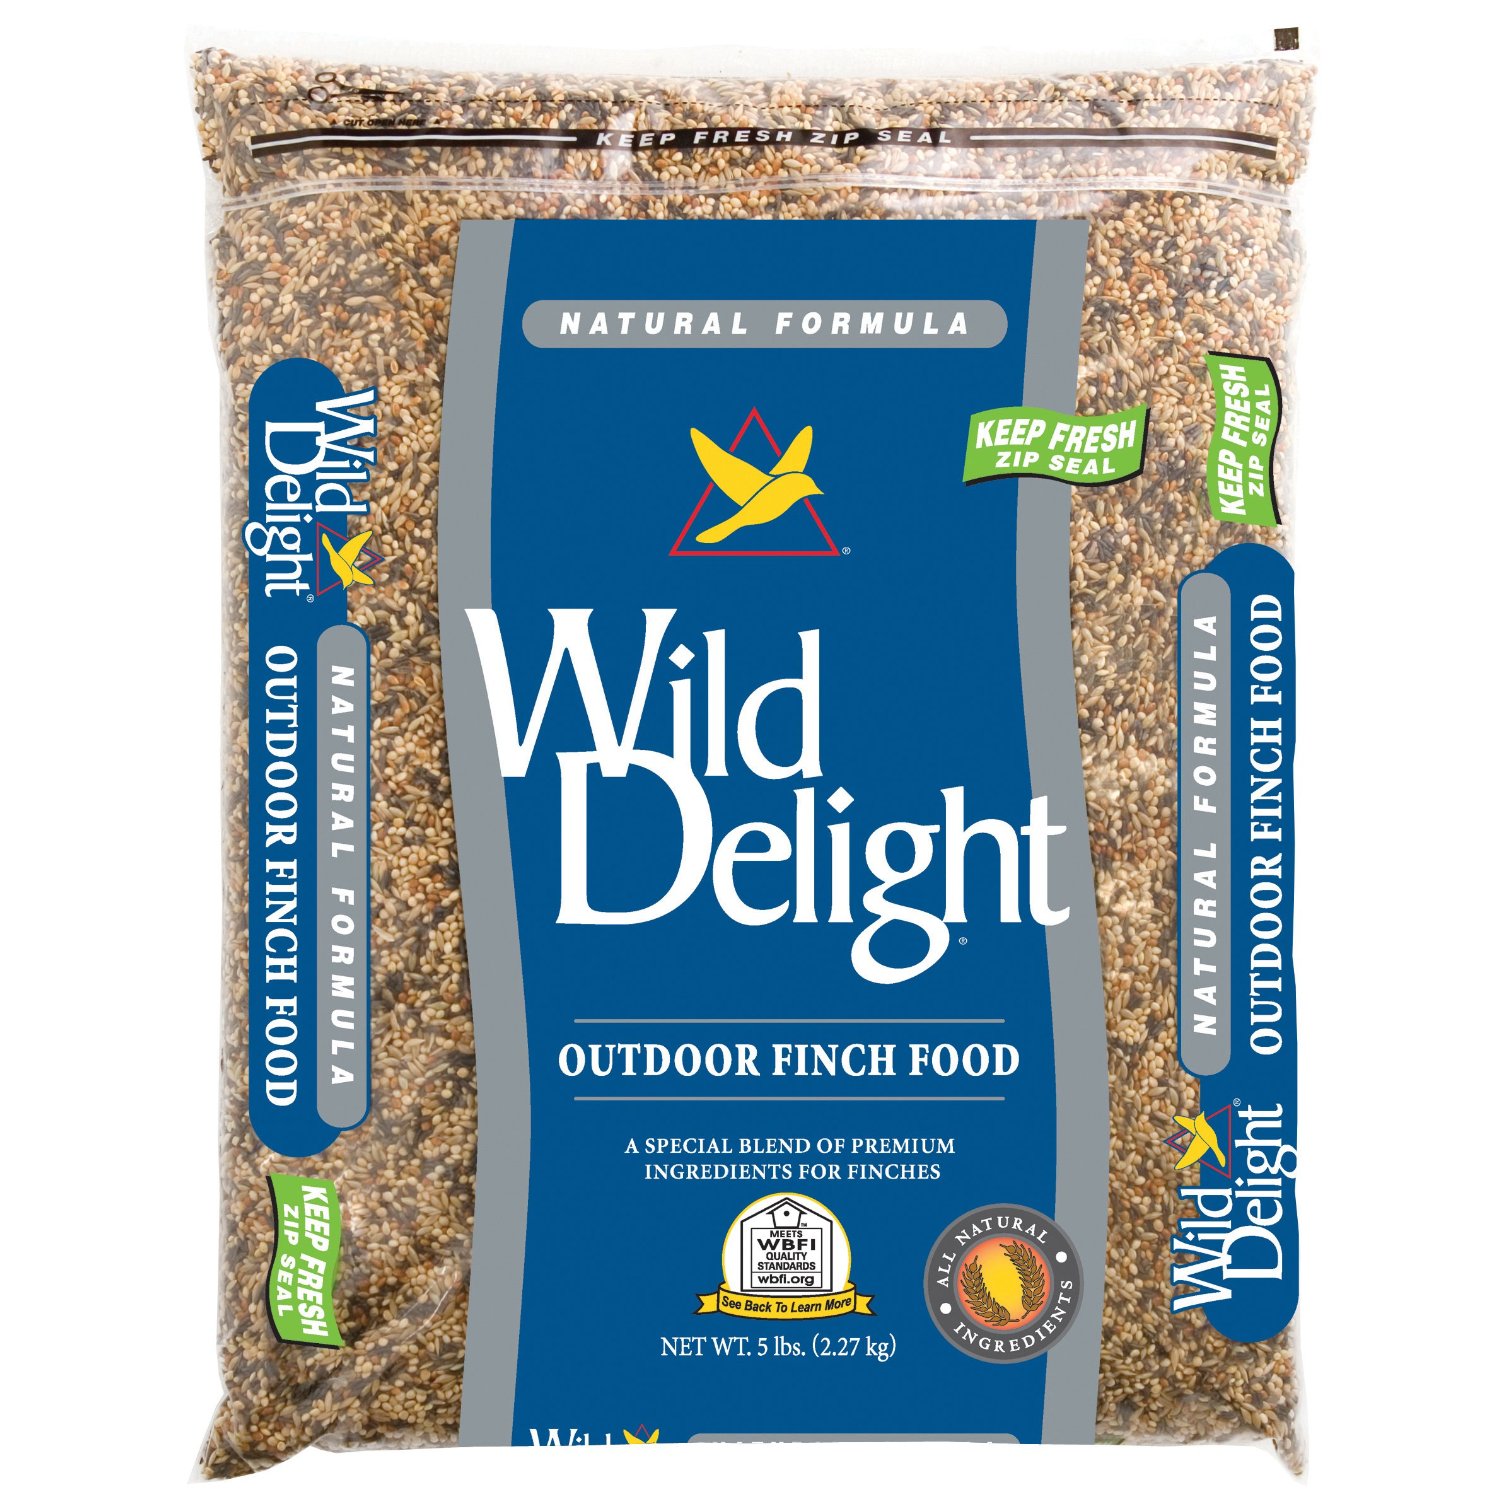 Wild Delight Outdoor Finch Food, 5 LB